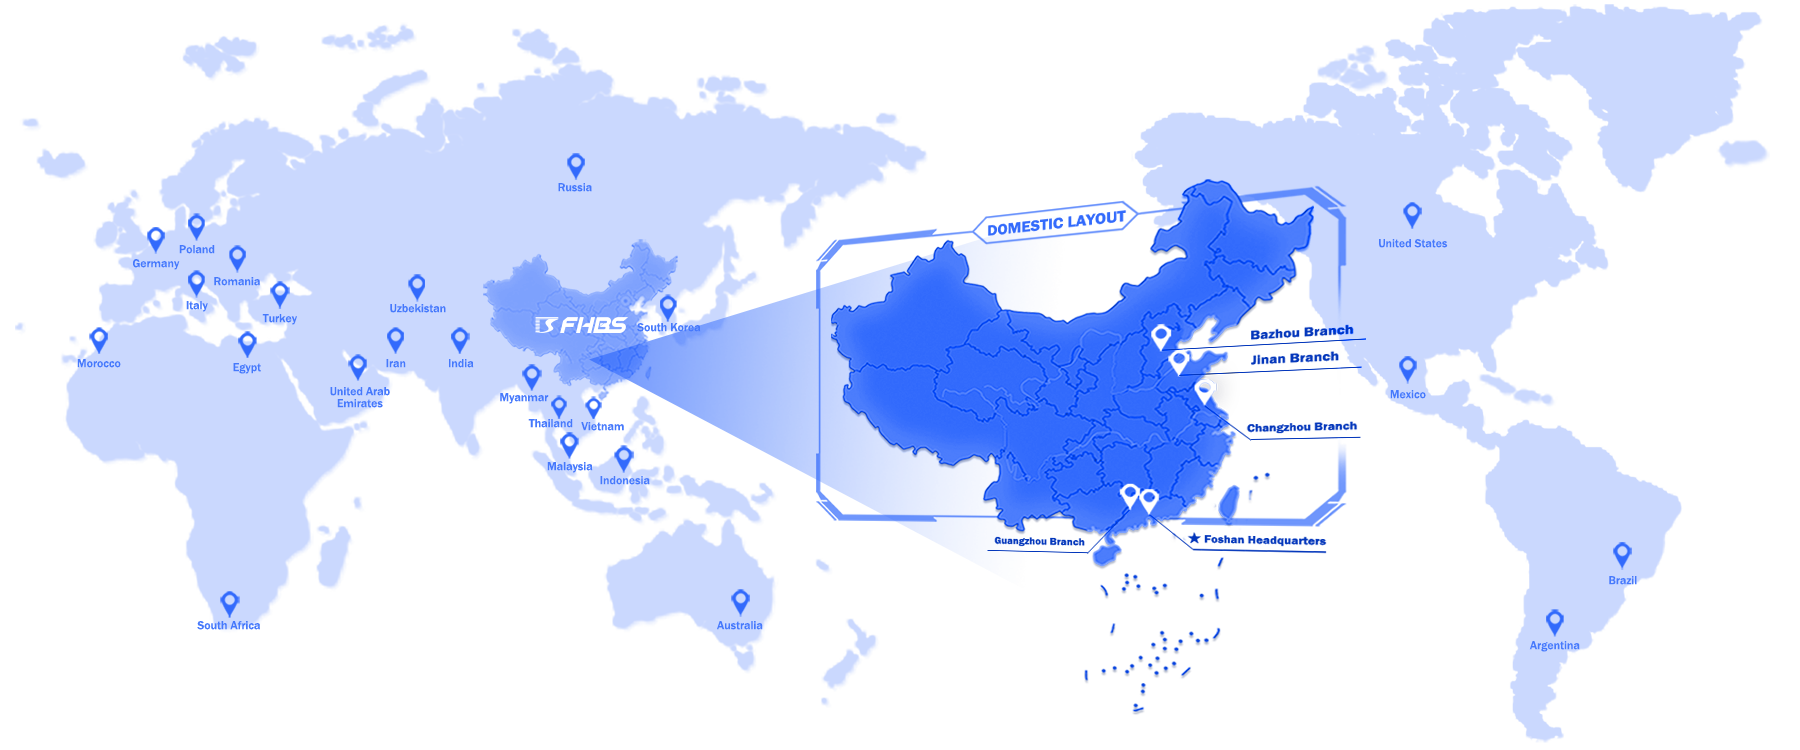 Global Network Service